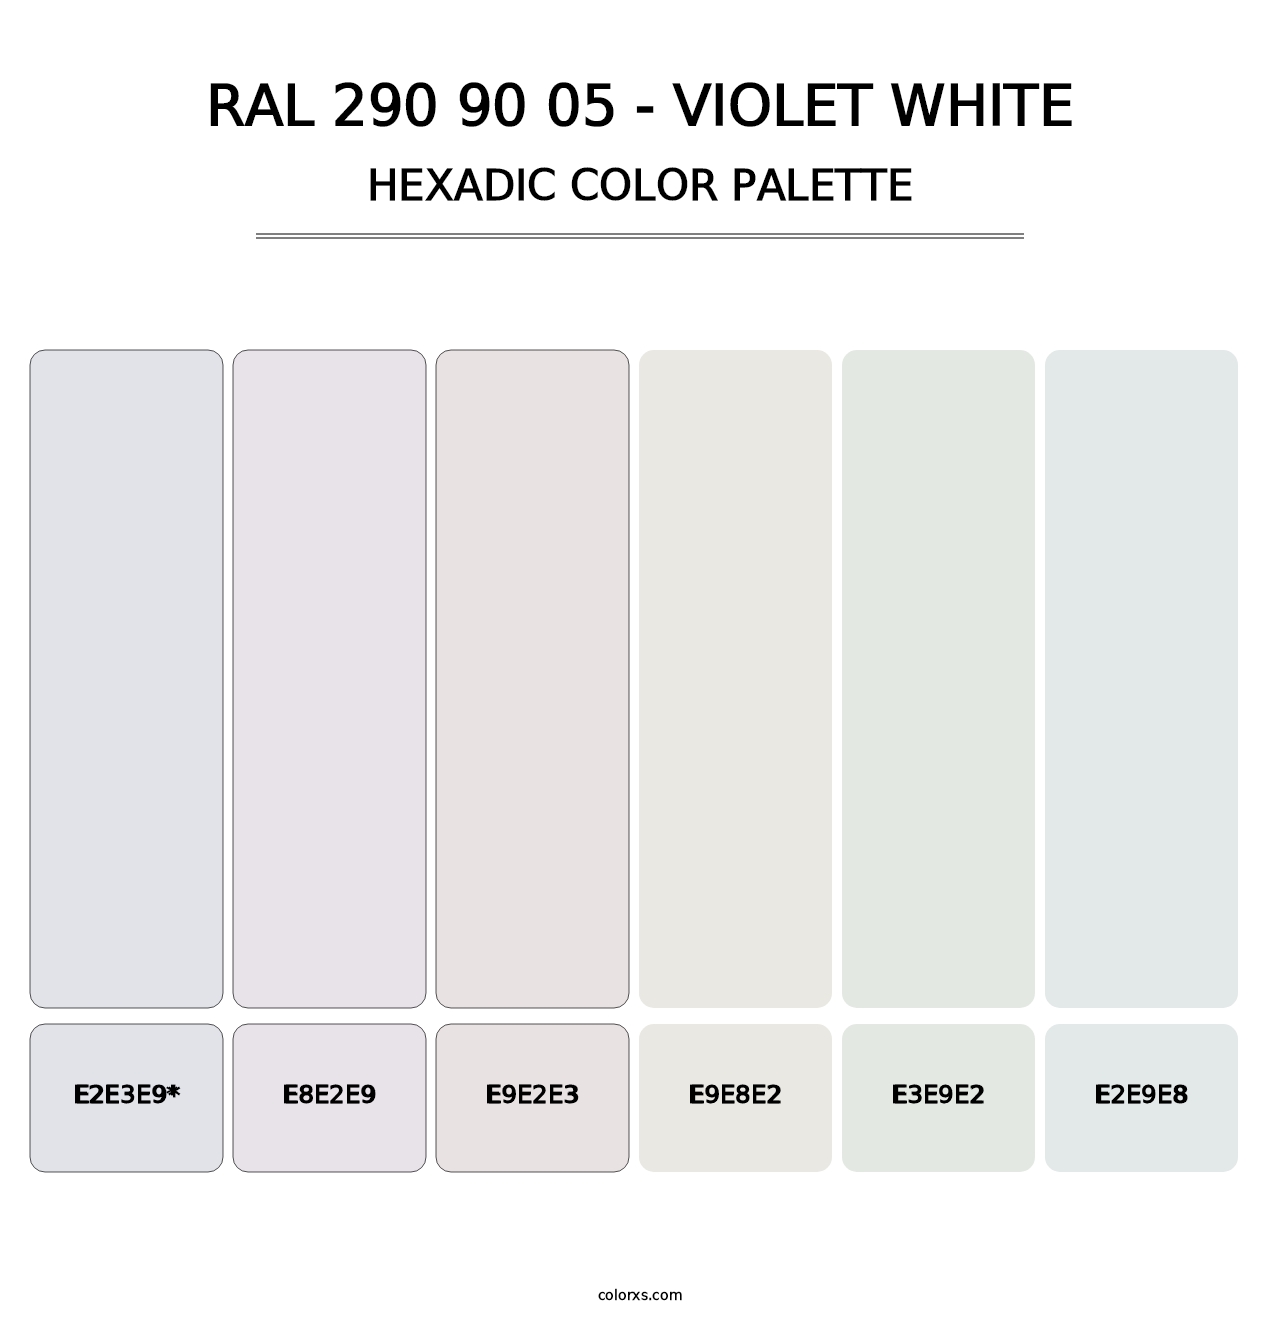 RAL 290 90 05 - Violet White - Hexadic Color Palette